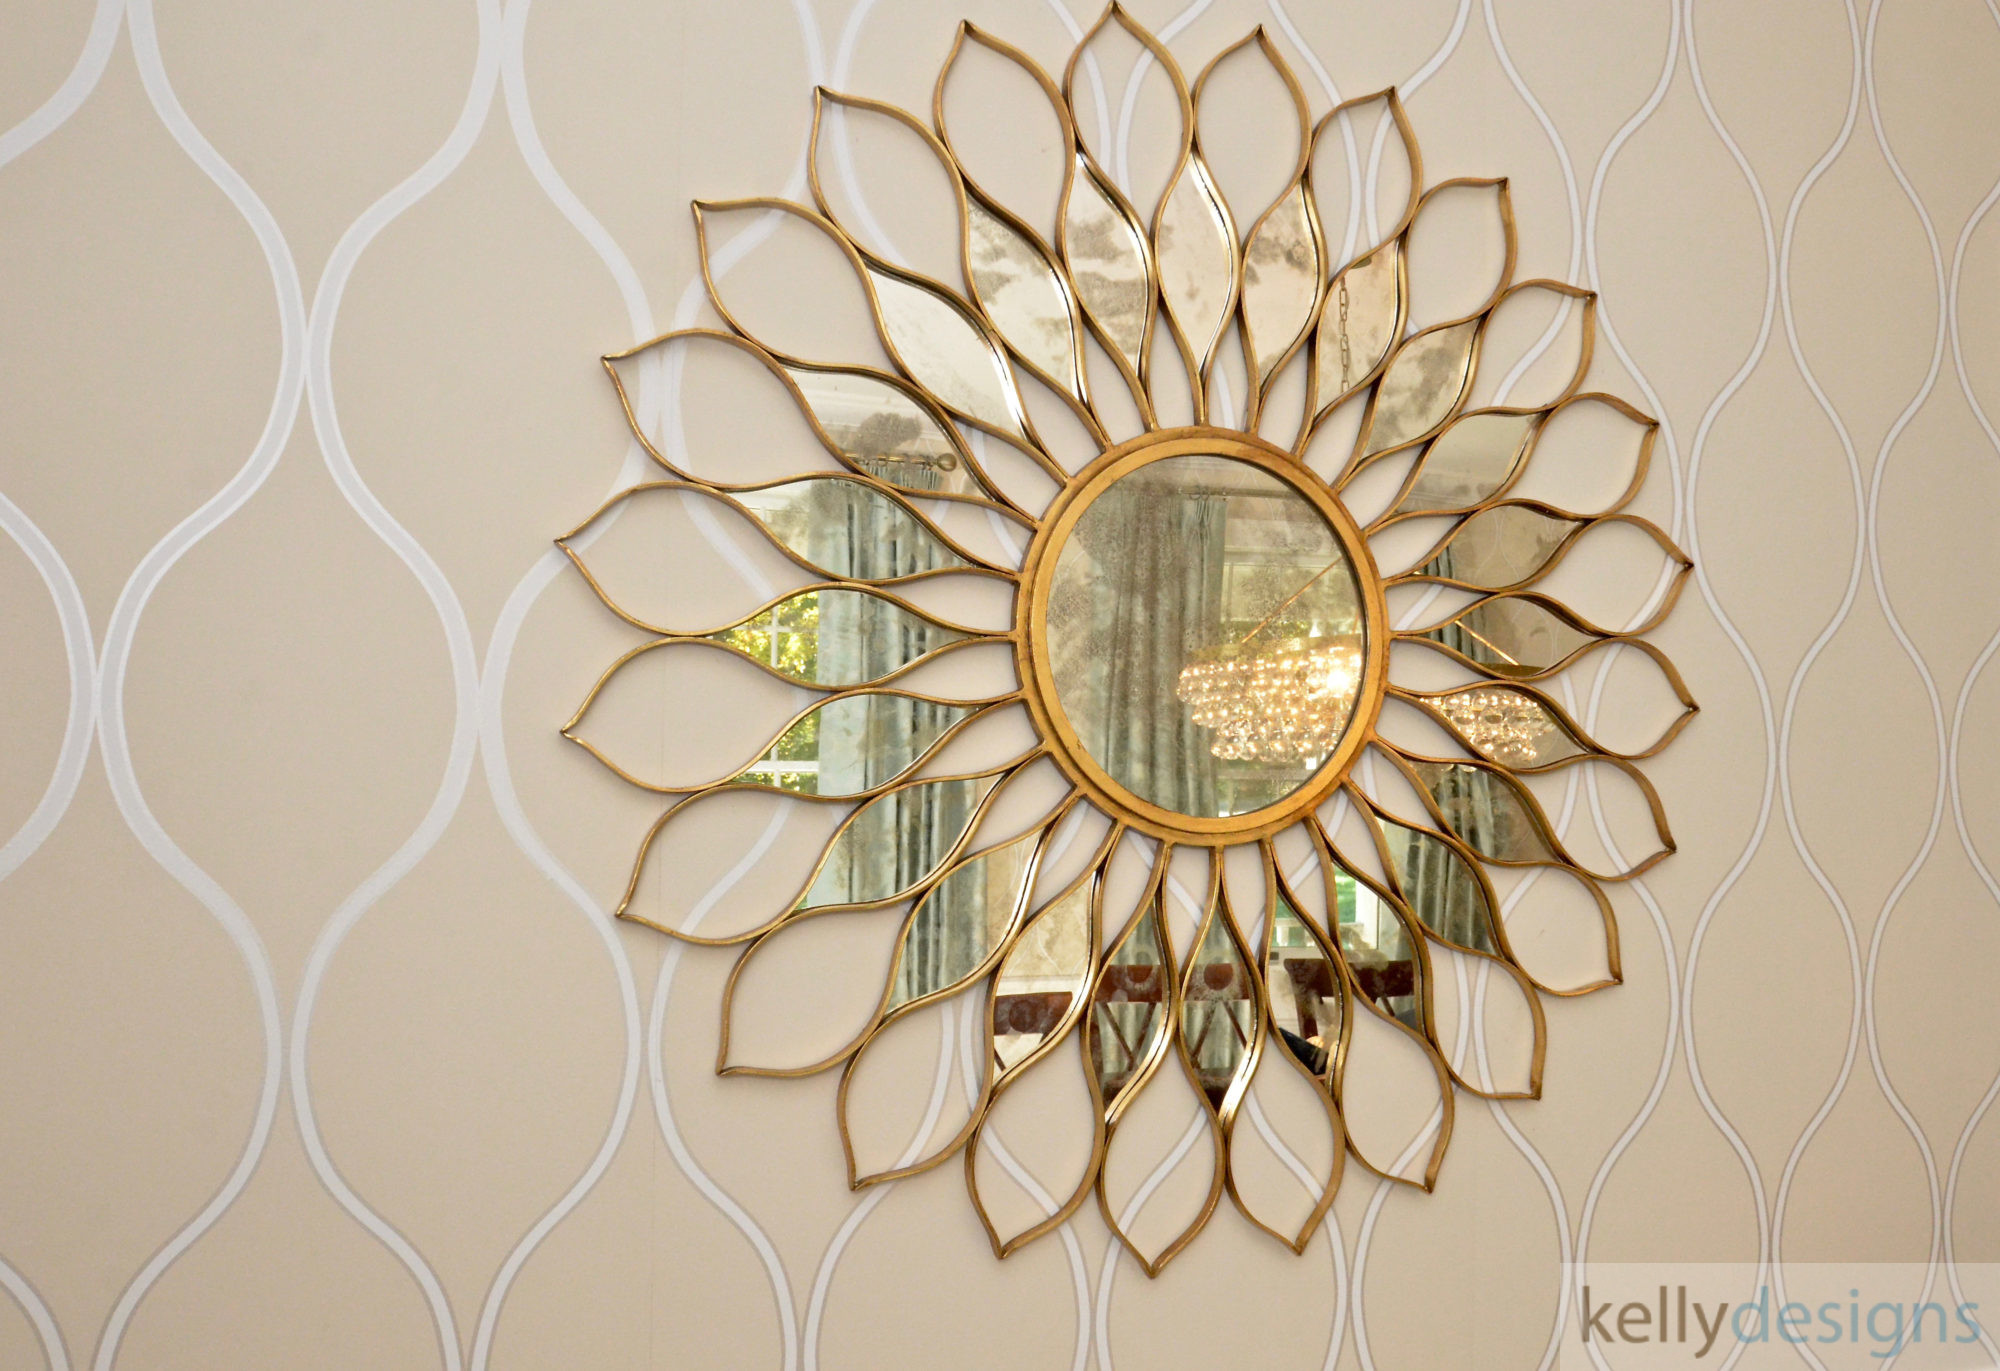 Pound Ridge Dining Room Mirror  - Interior Design By kellydesigns